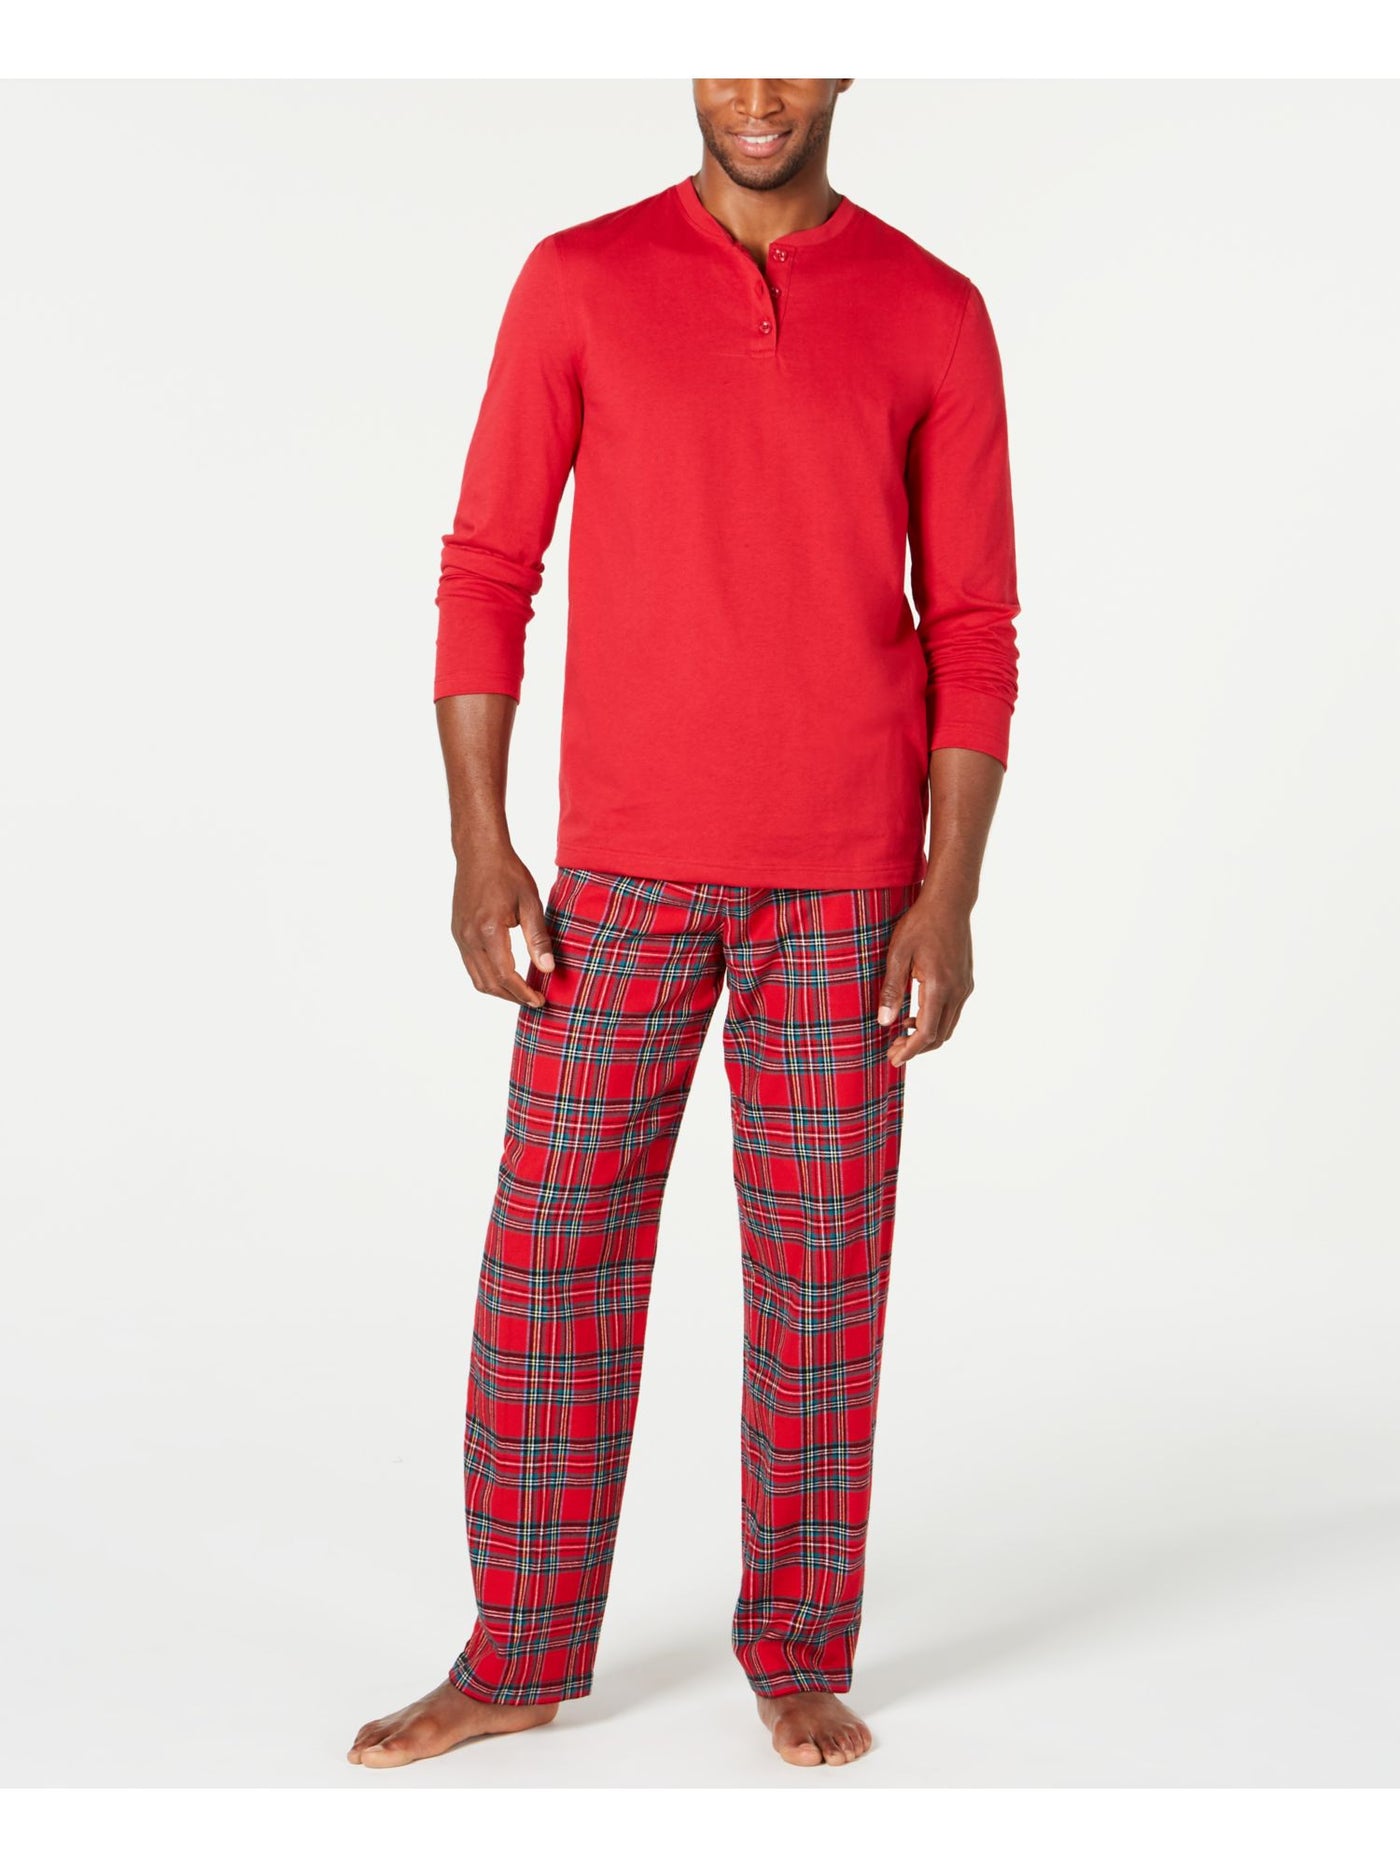 FAMILY PJs Mens Red Drawstring Long Sleeve Henley Top Straight leg Pants Pajamas Big & Tall 2XB